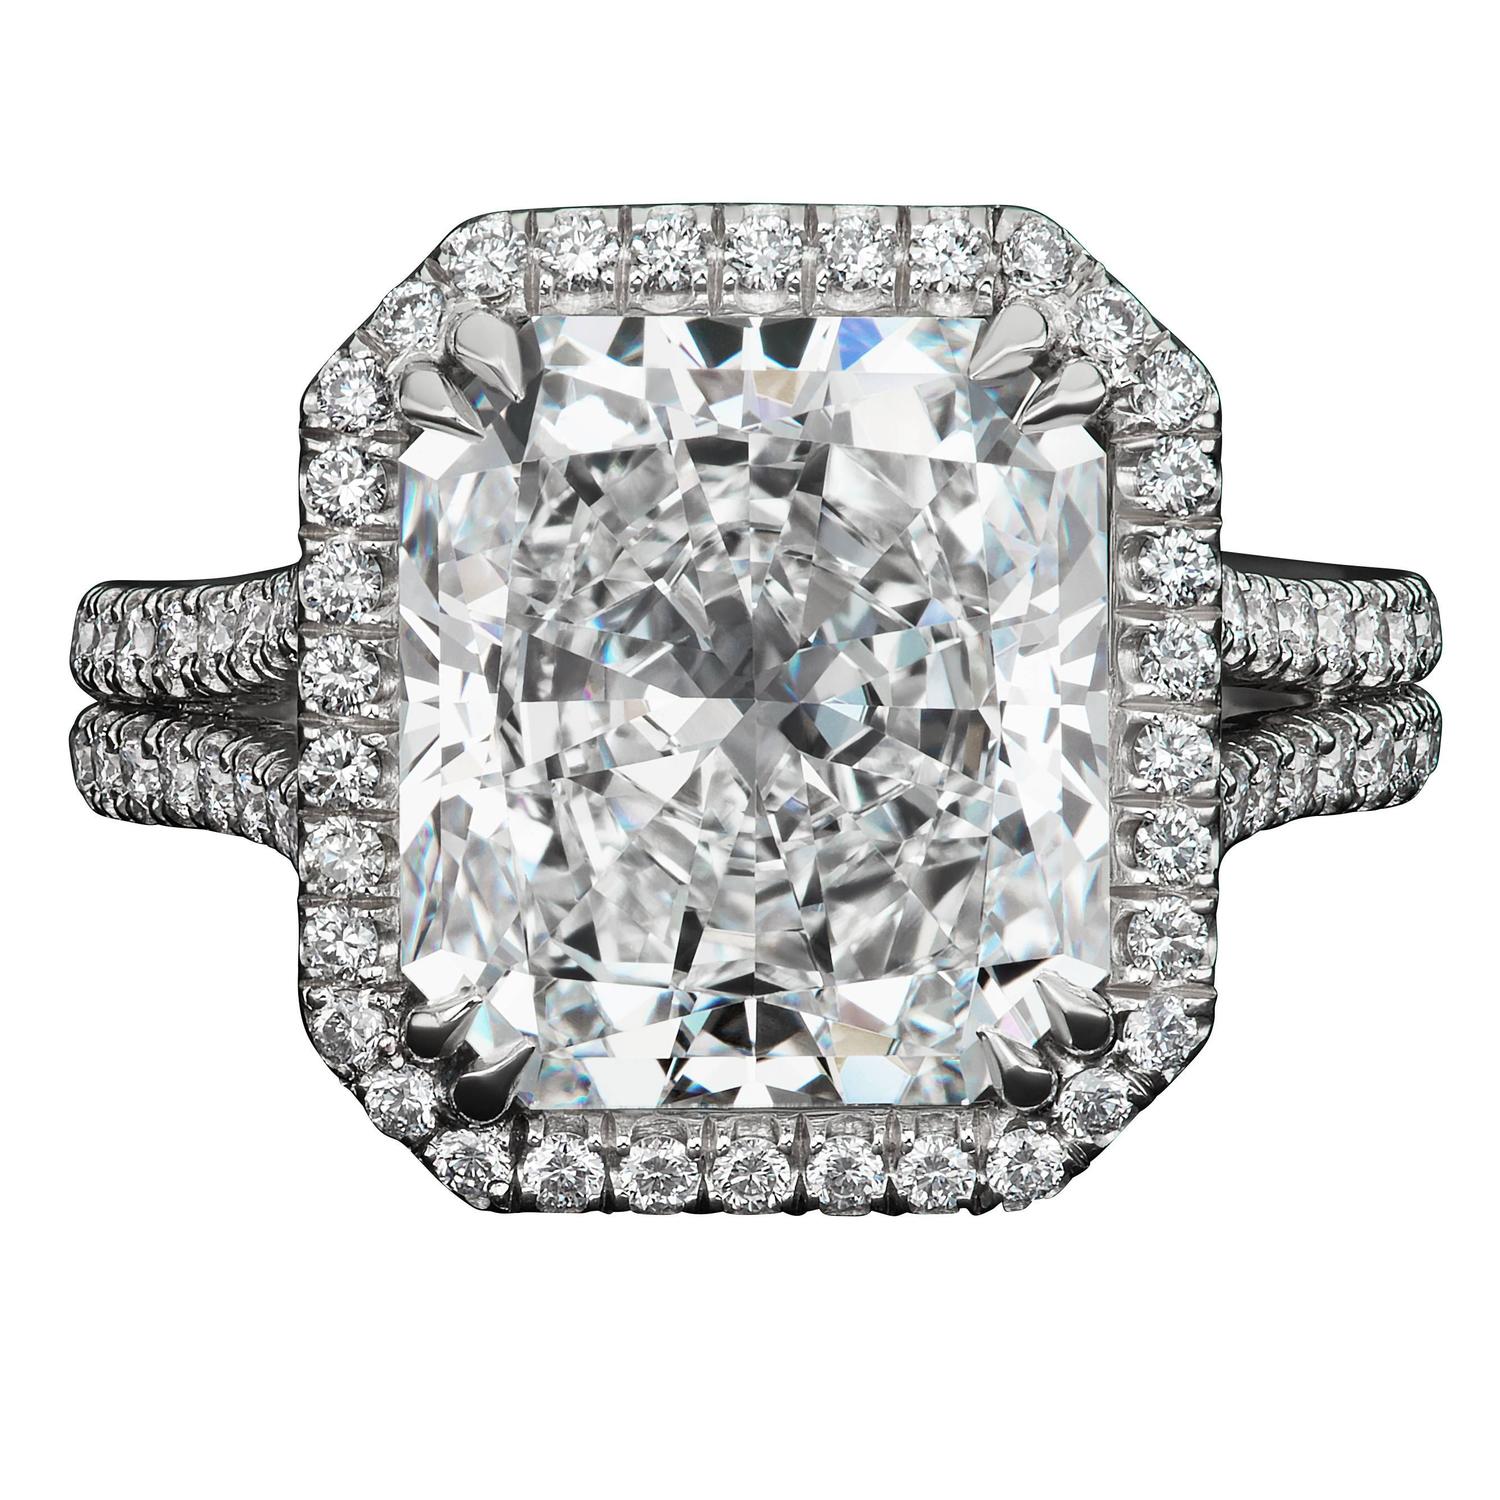 5.52 Carat Radiant Cut Diamond Platinum Ring For Sale at 1stdibs